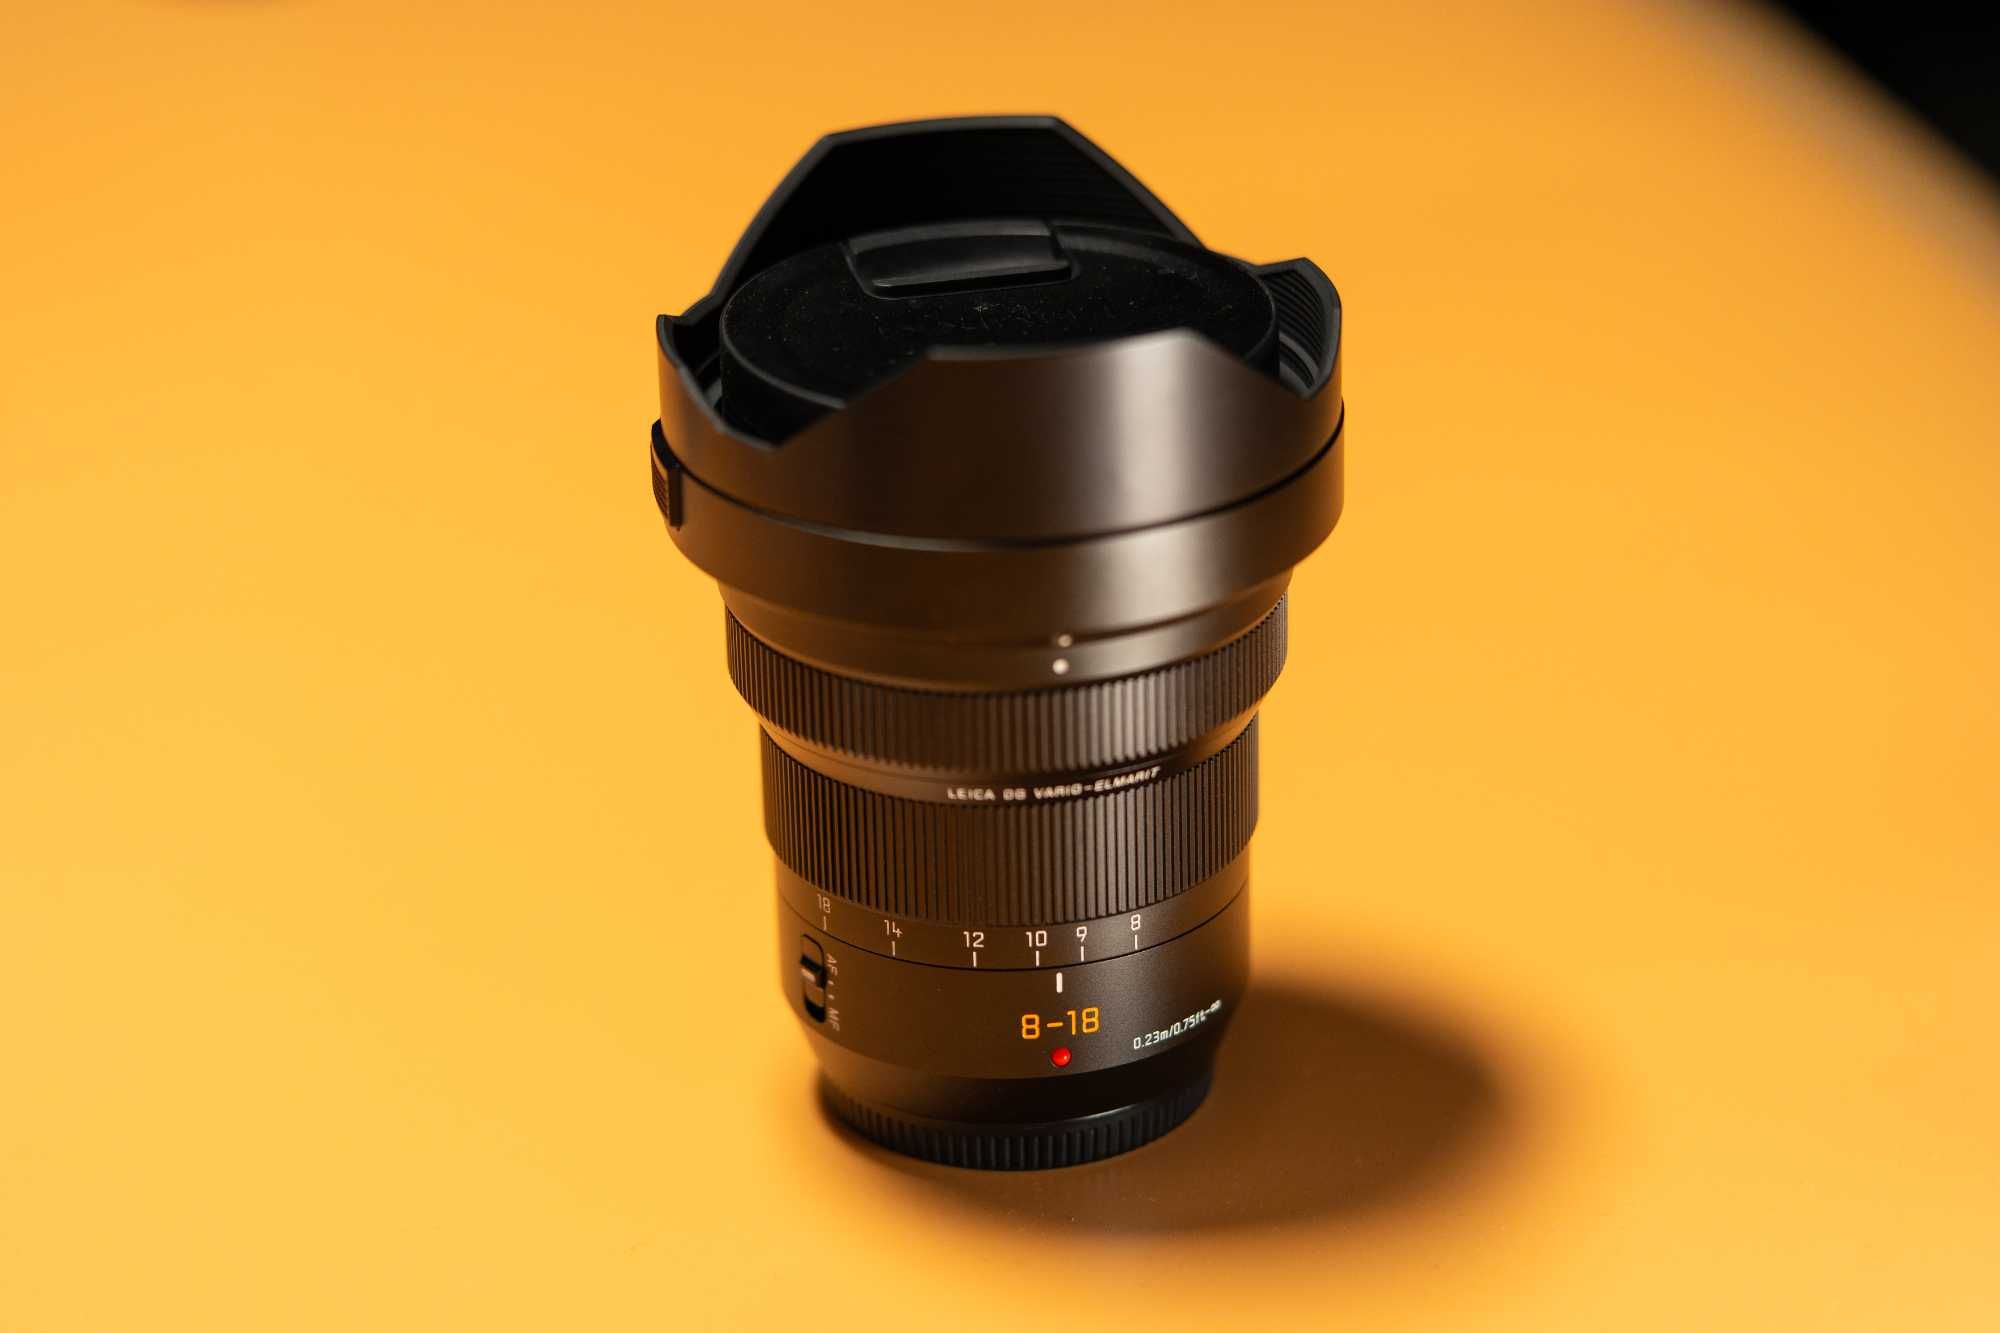 Obiectiv Panasonic 8-18mm Leica DG Vario-Elmarit f2.8-4.0 filtru cadou